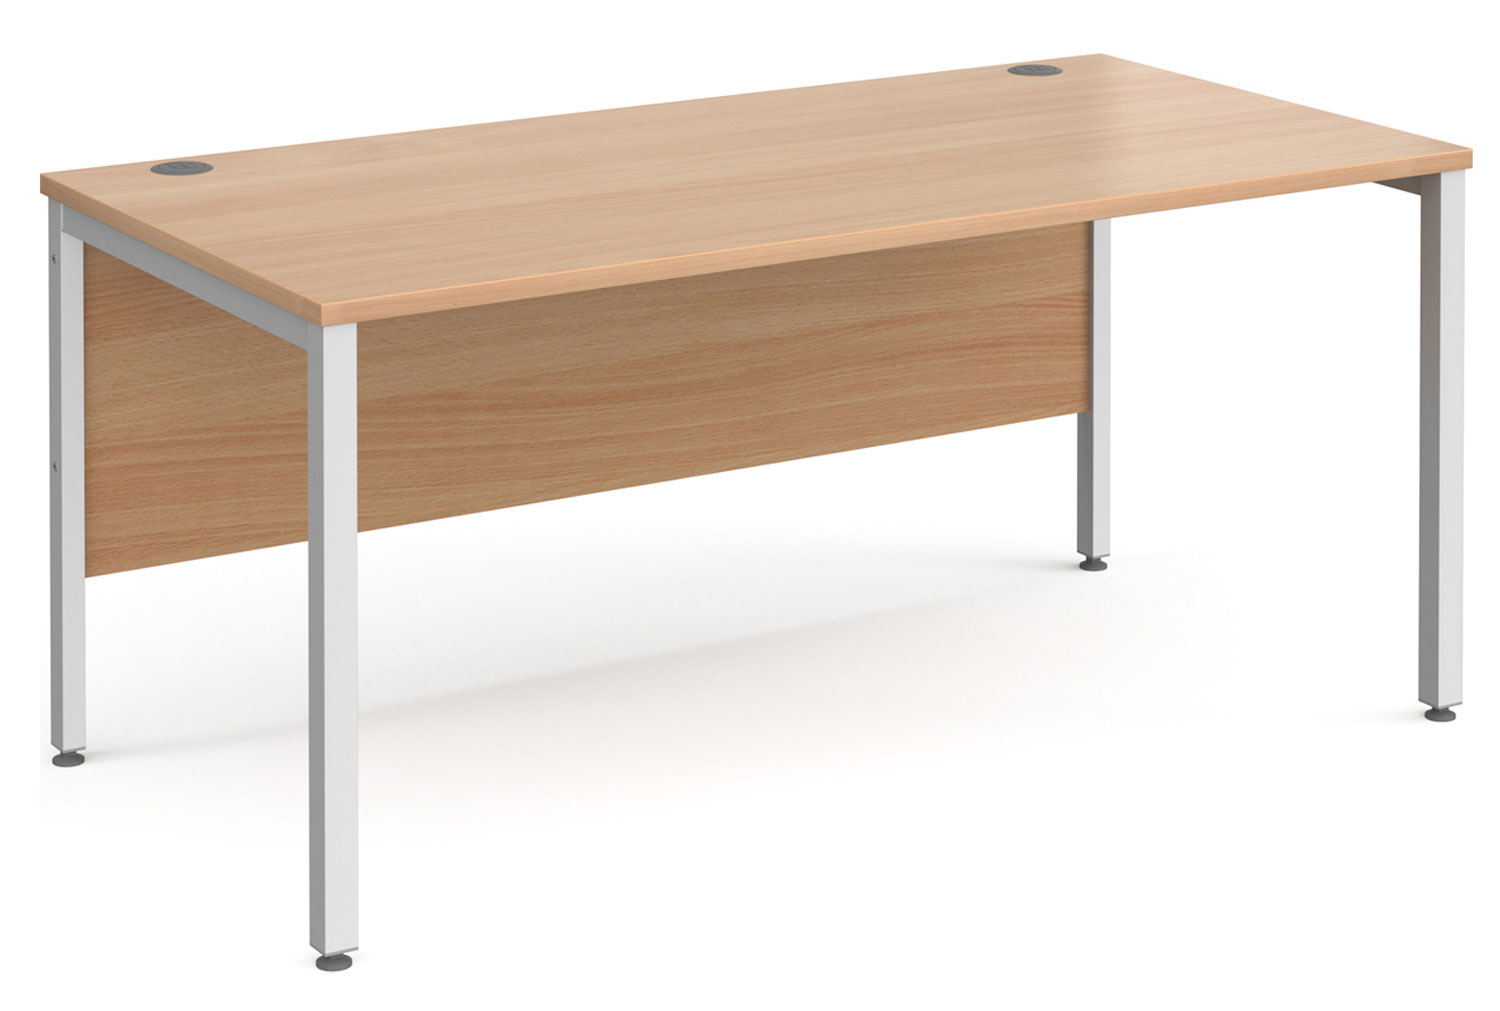 Tully Bench Rectangular Office Desk 160wx80dx73h (cm), Beech, Fully Installed